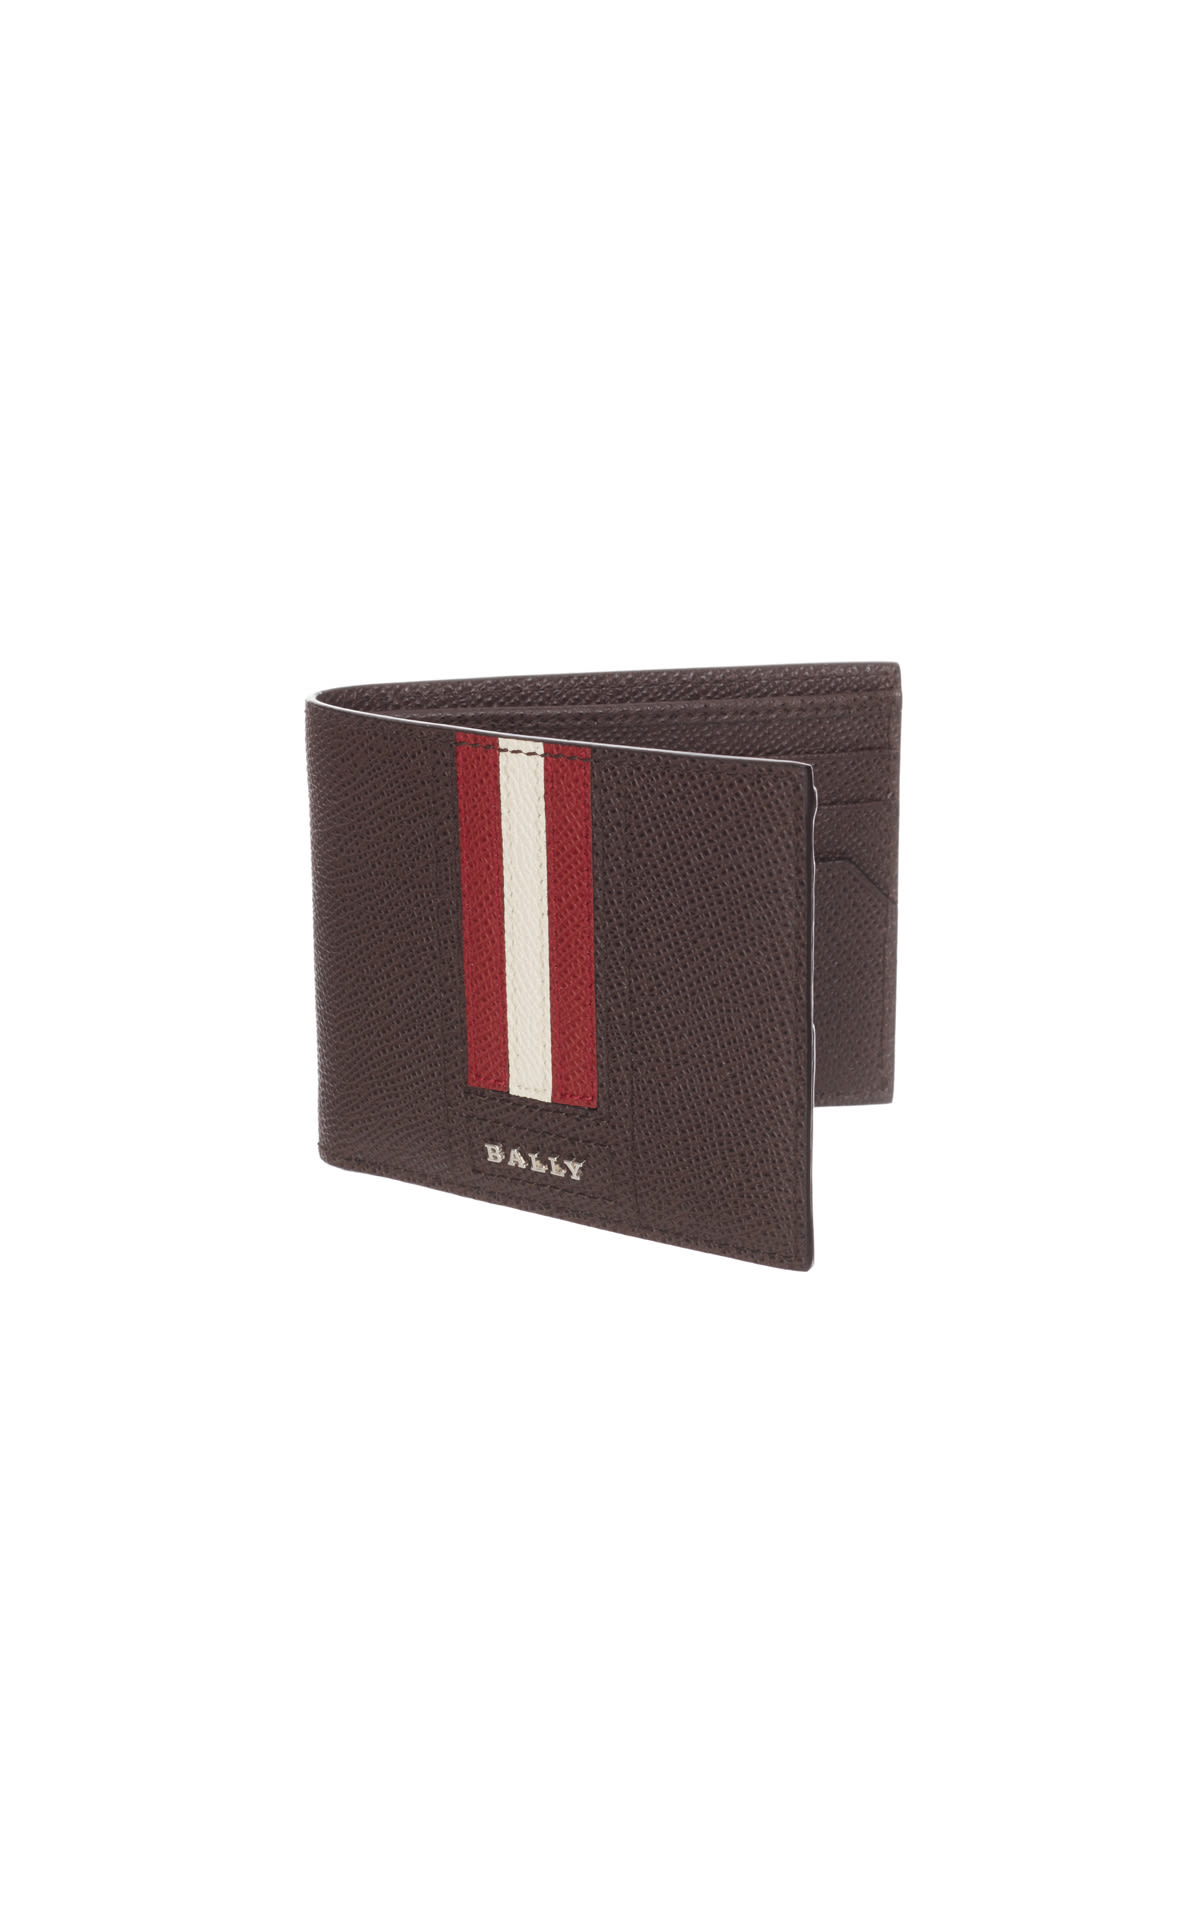  Bally Stripe wallet from Bicester Village